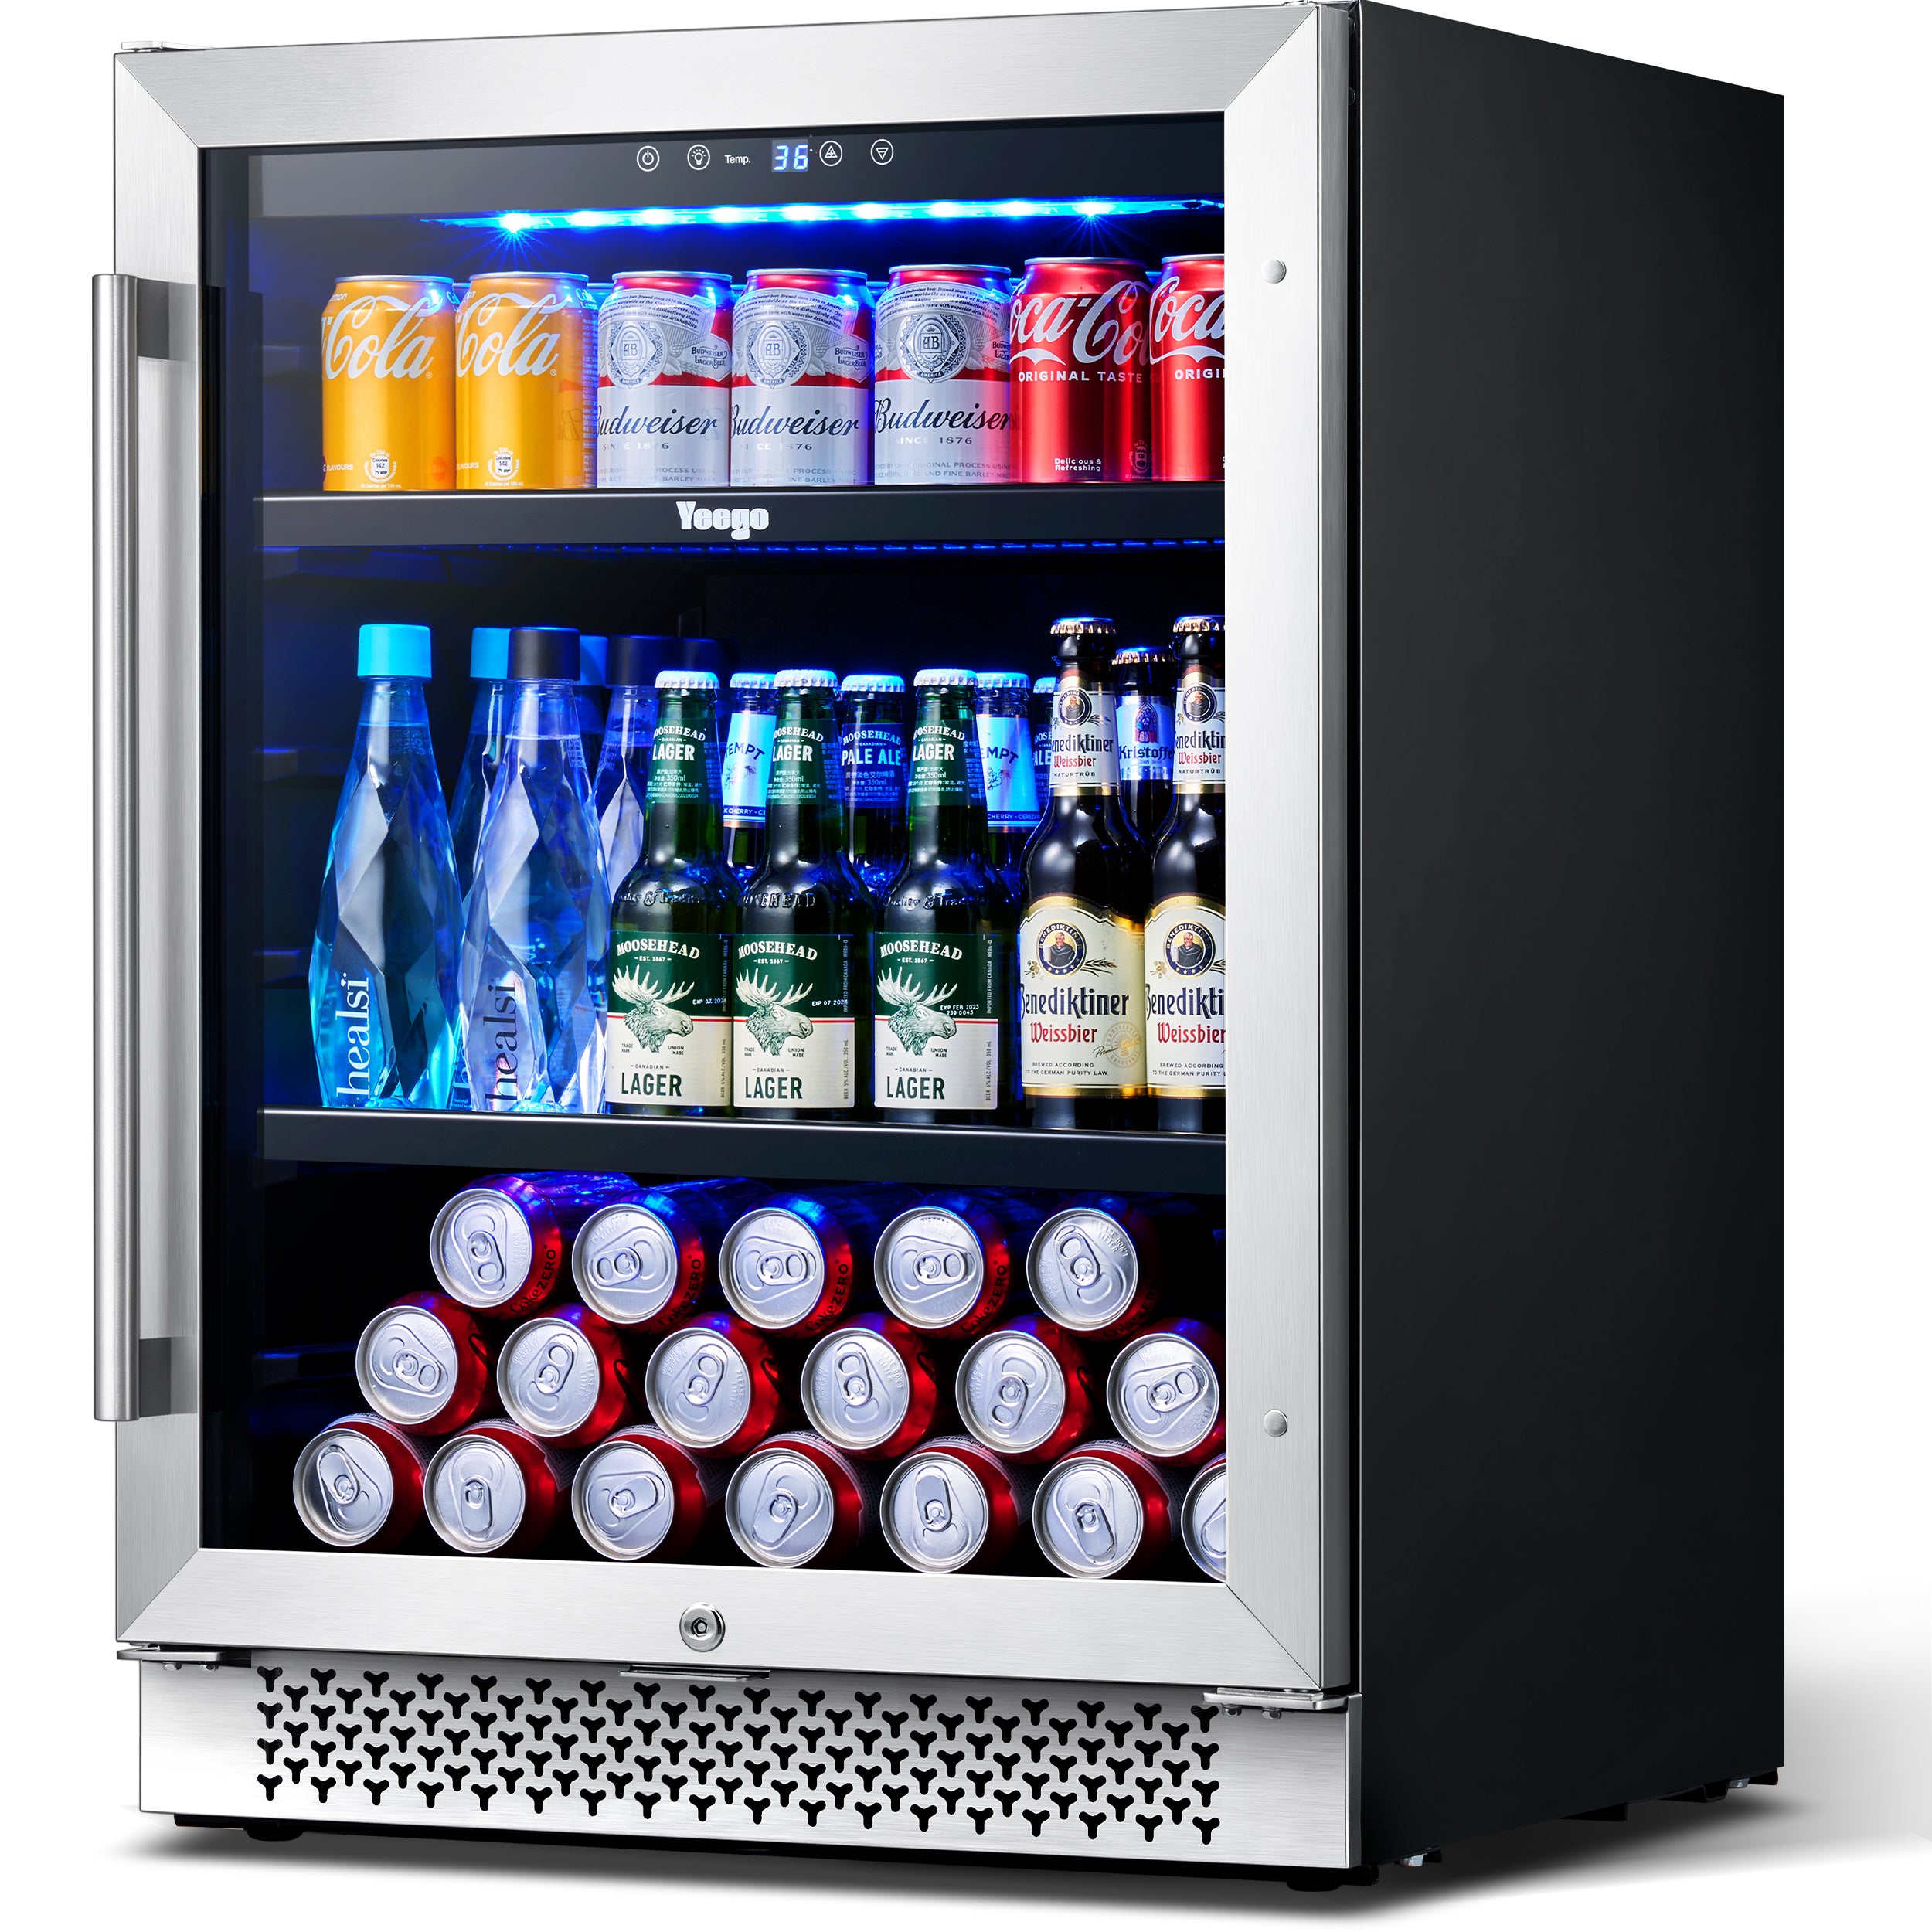 Yeego 24 Inch Wide 180 Cans Beverage Drink Fridge, Built-In or Freestanding